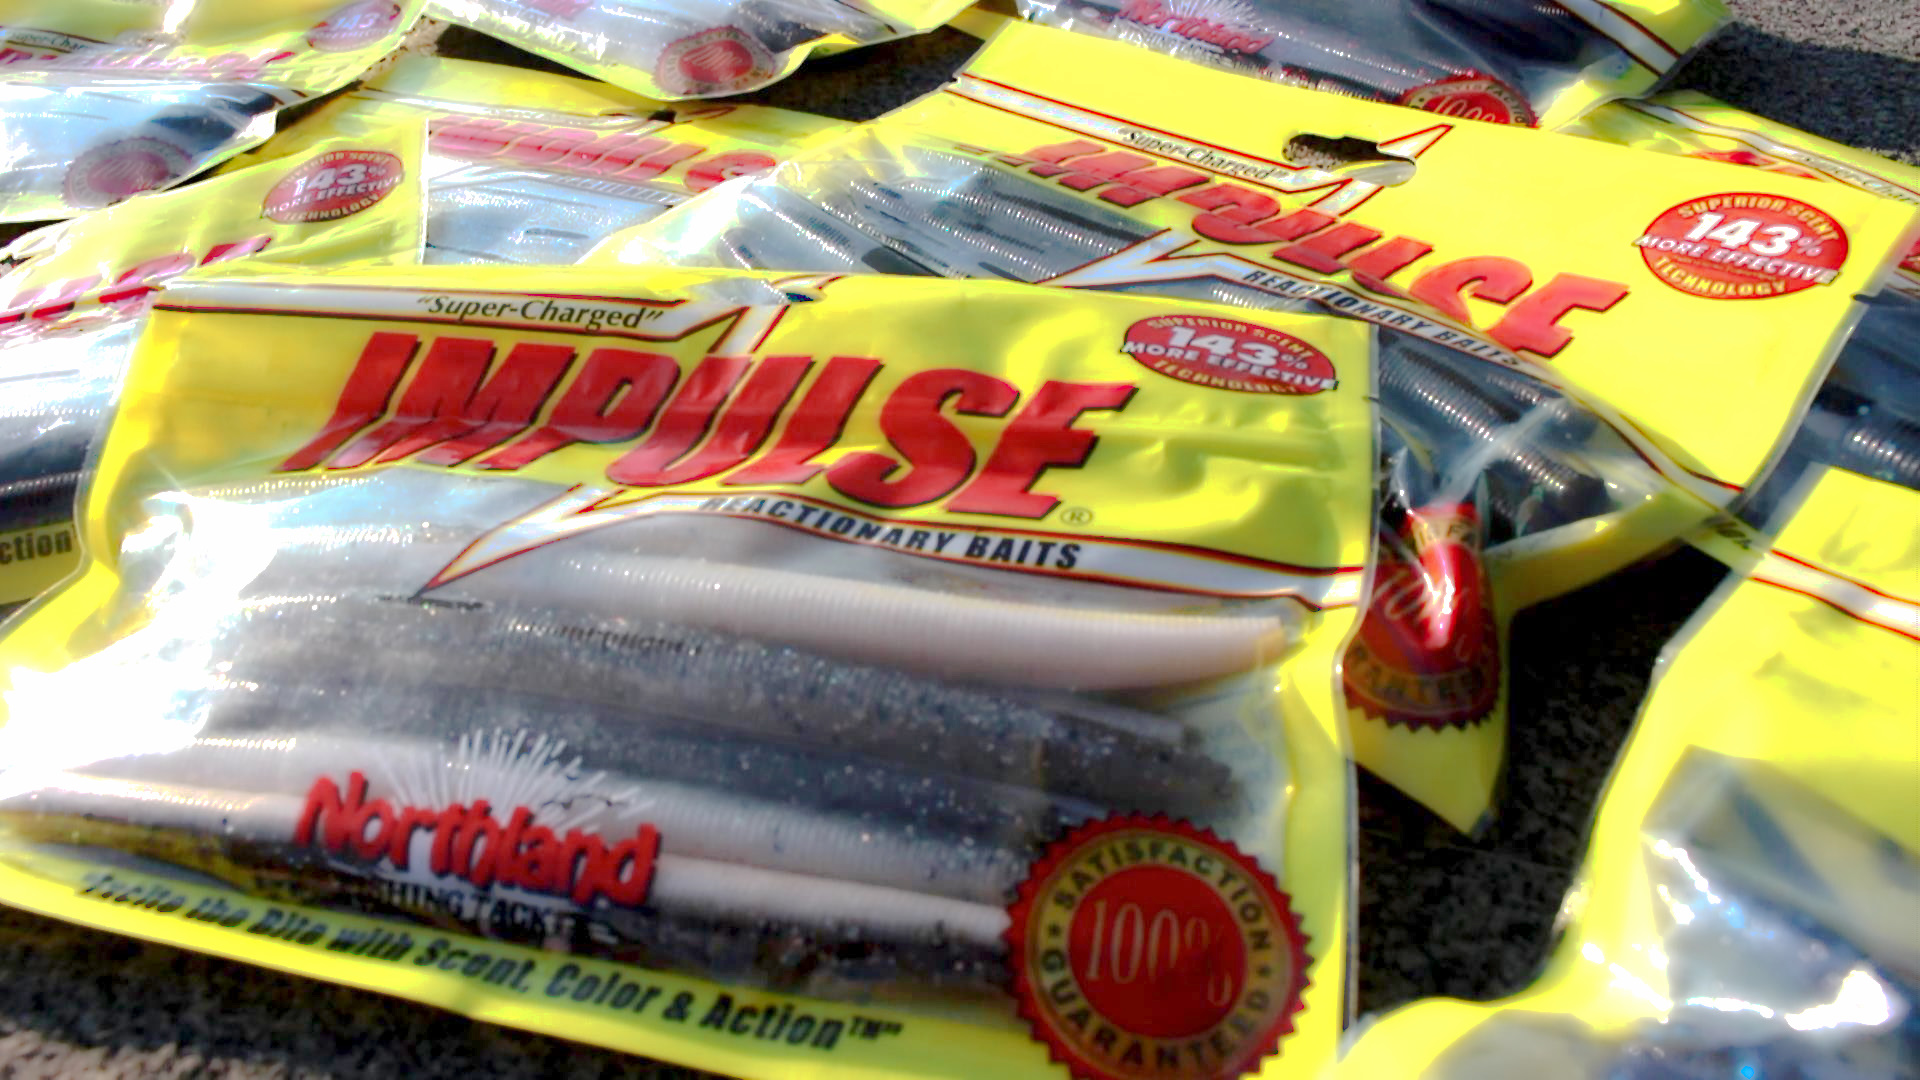 Northland Fishing Tackle Impulse Soft Plastic baits.